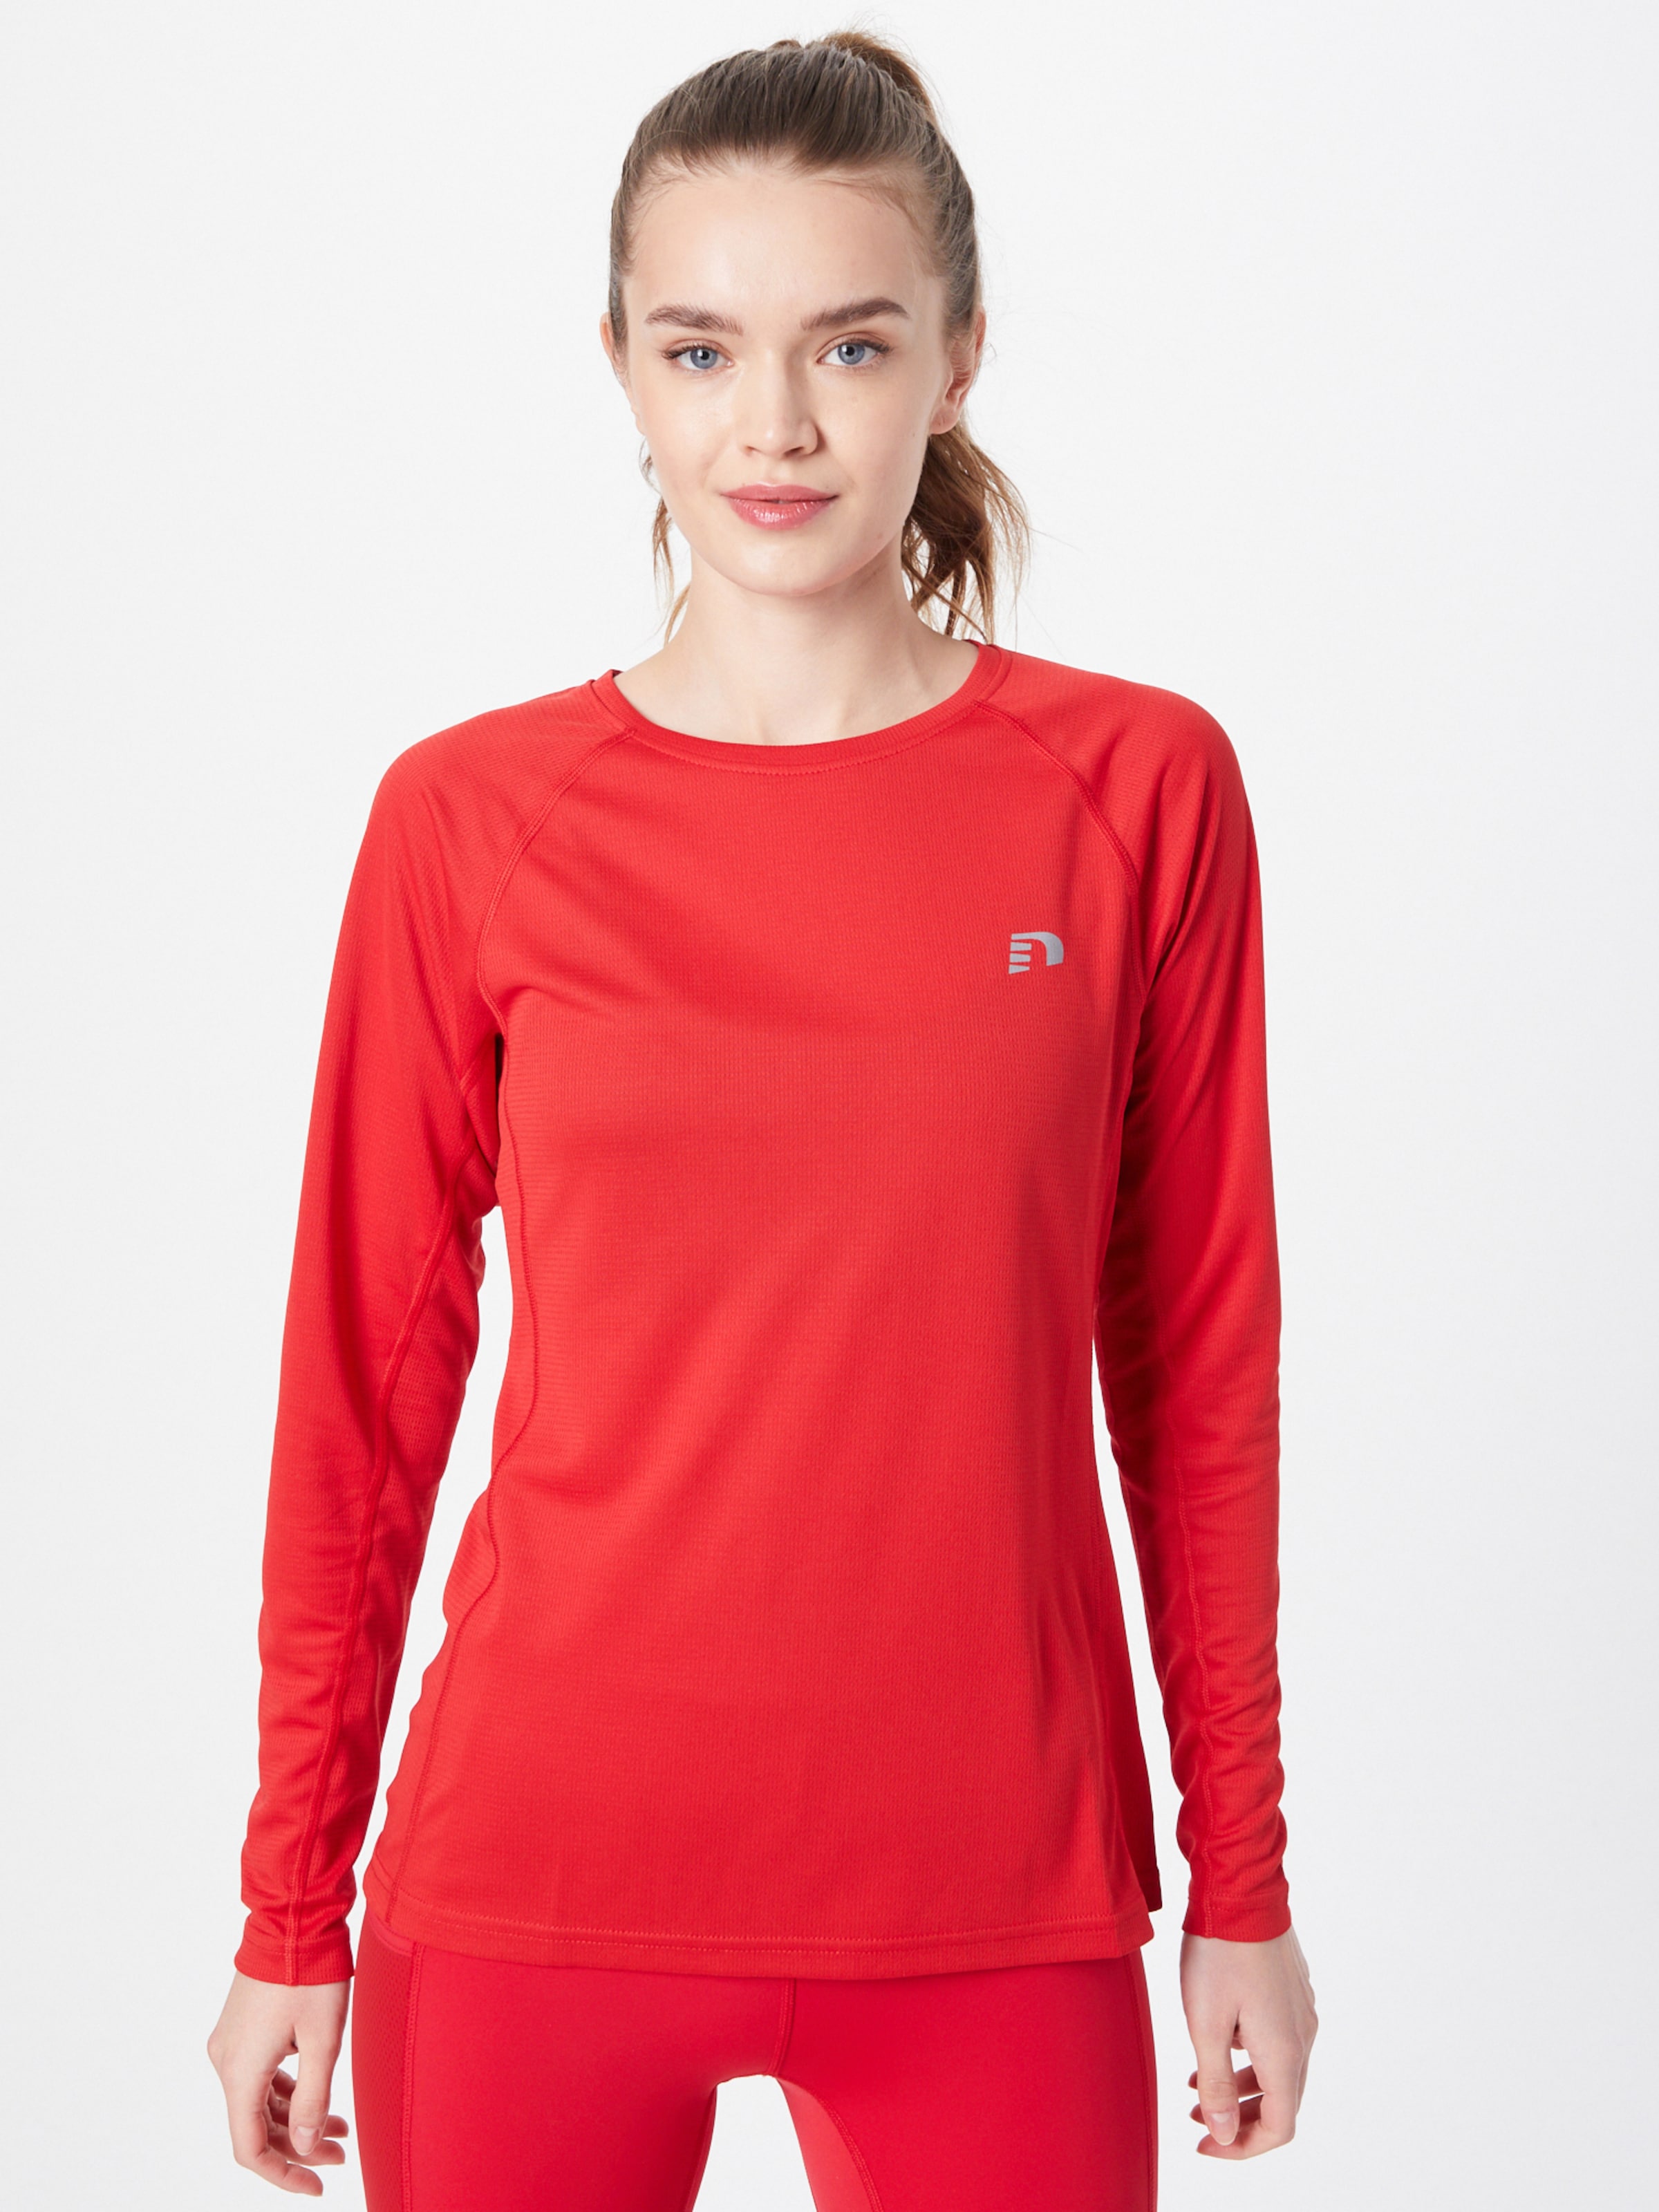 Frauen Shirts & Tops Newline Sportshirt in Rot - QP36400